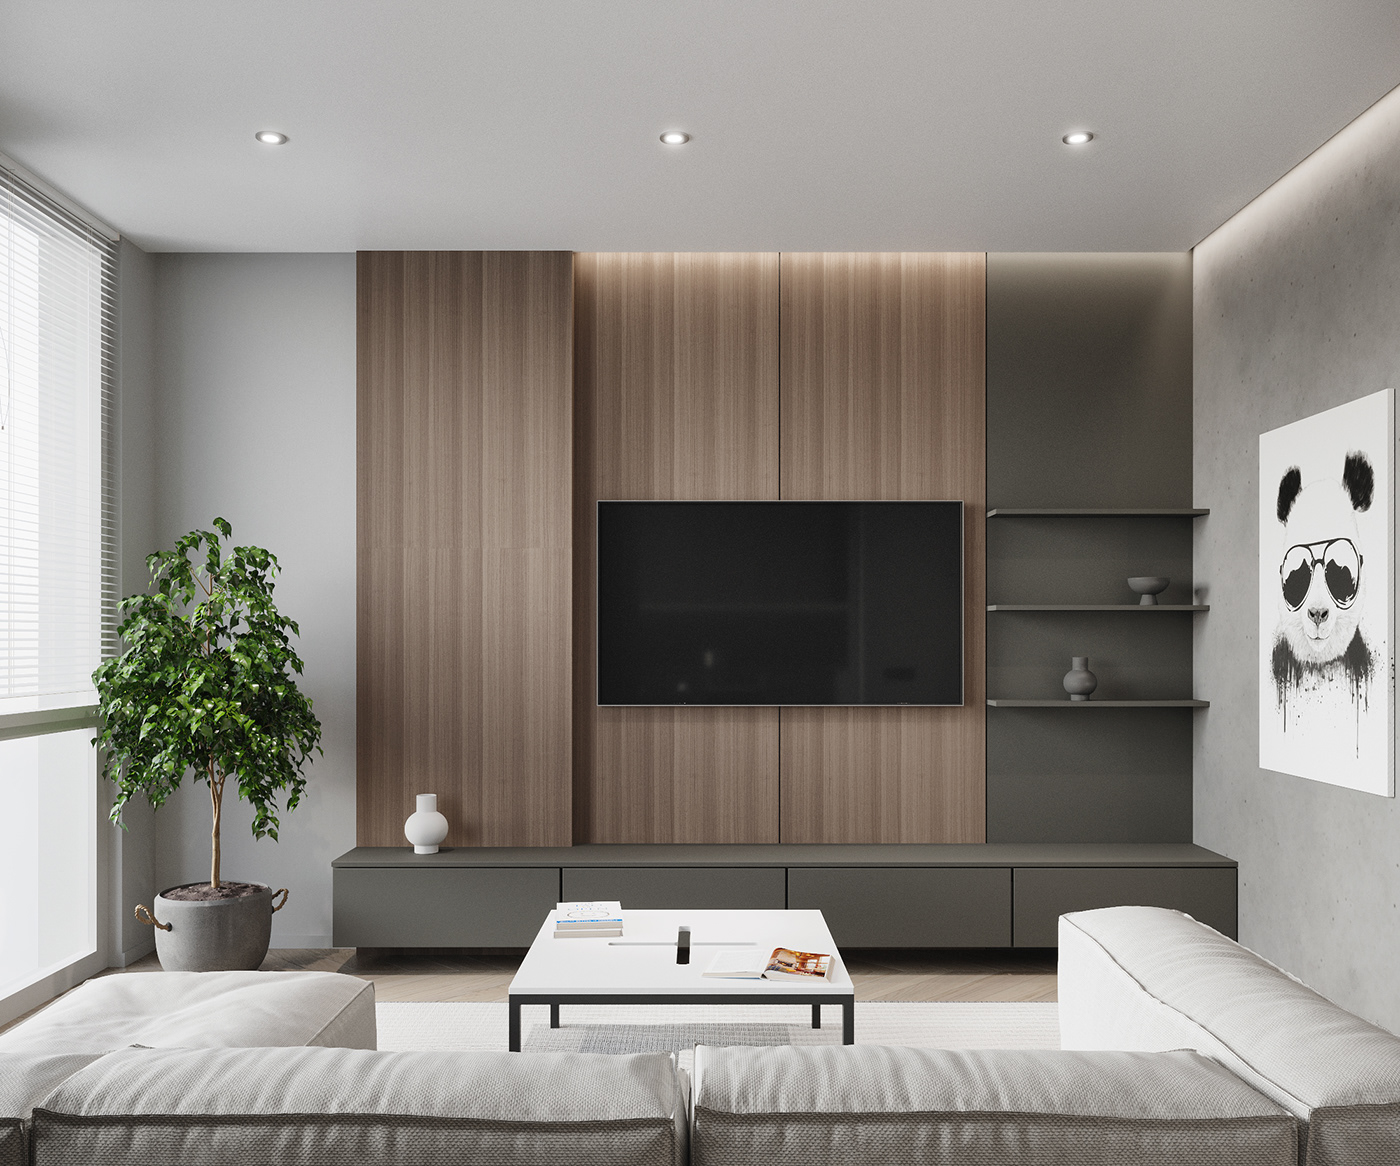 3ds max apartamento architecture corona design Interior kitchen livingroom luxury modernluxury